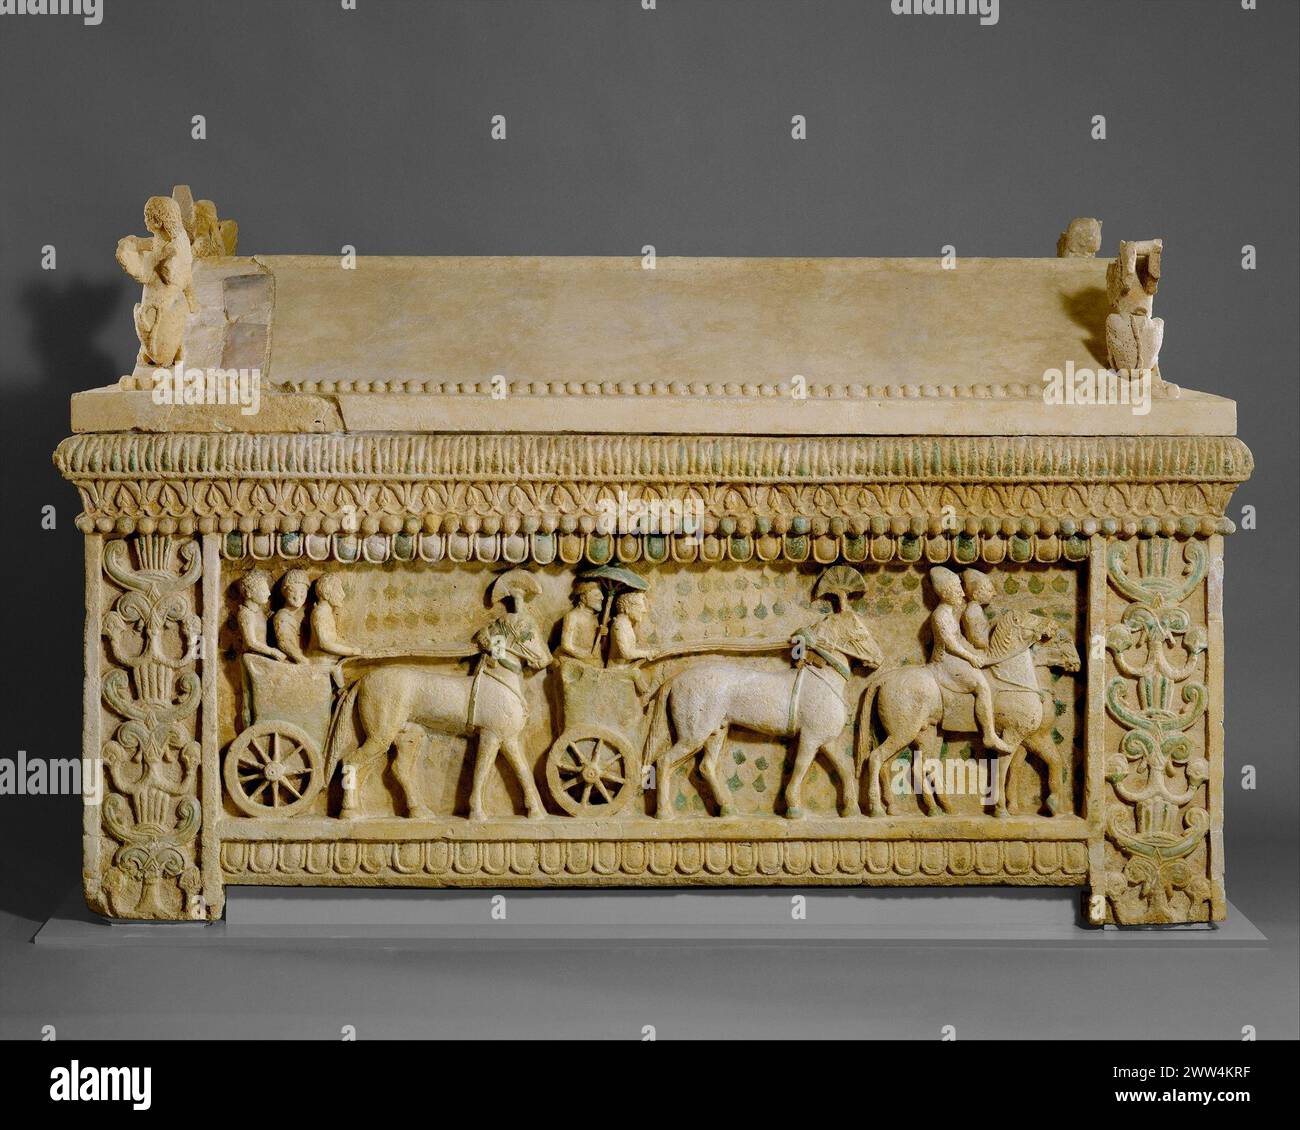 Limestone sarcophagus: the Amathus sarcophagus Period: Archaic Date: 2nd quarter of the 5th century BCE Culture: Cypriot Medium: Hard limestone Stock Photo